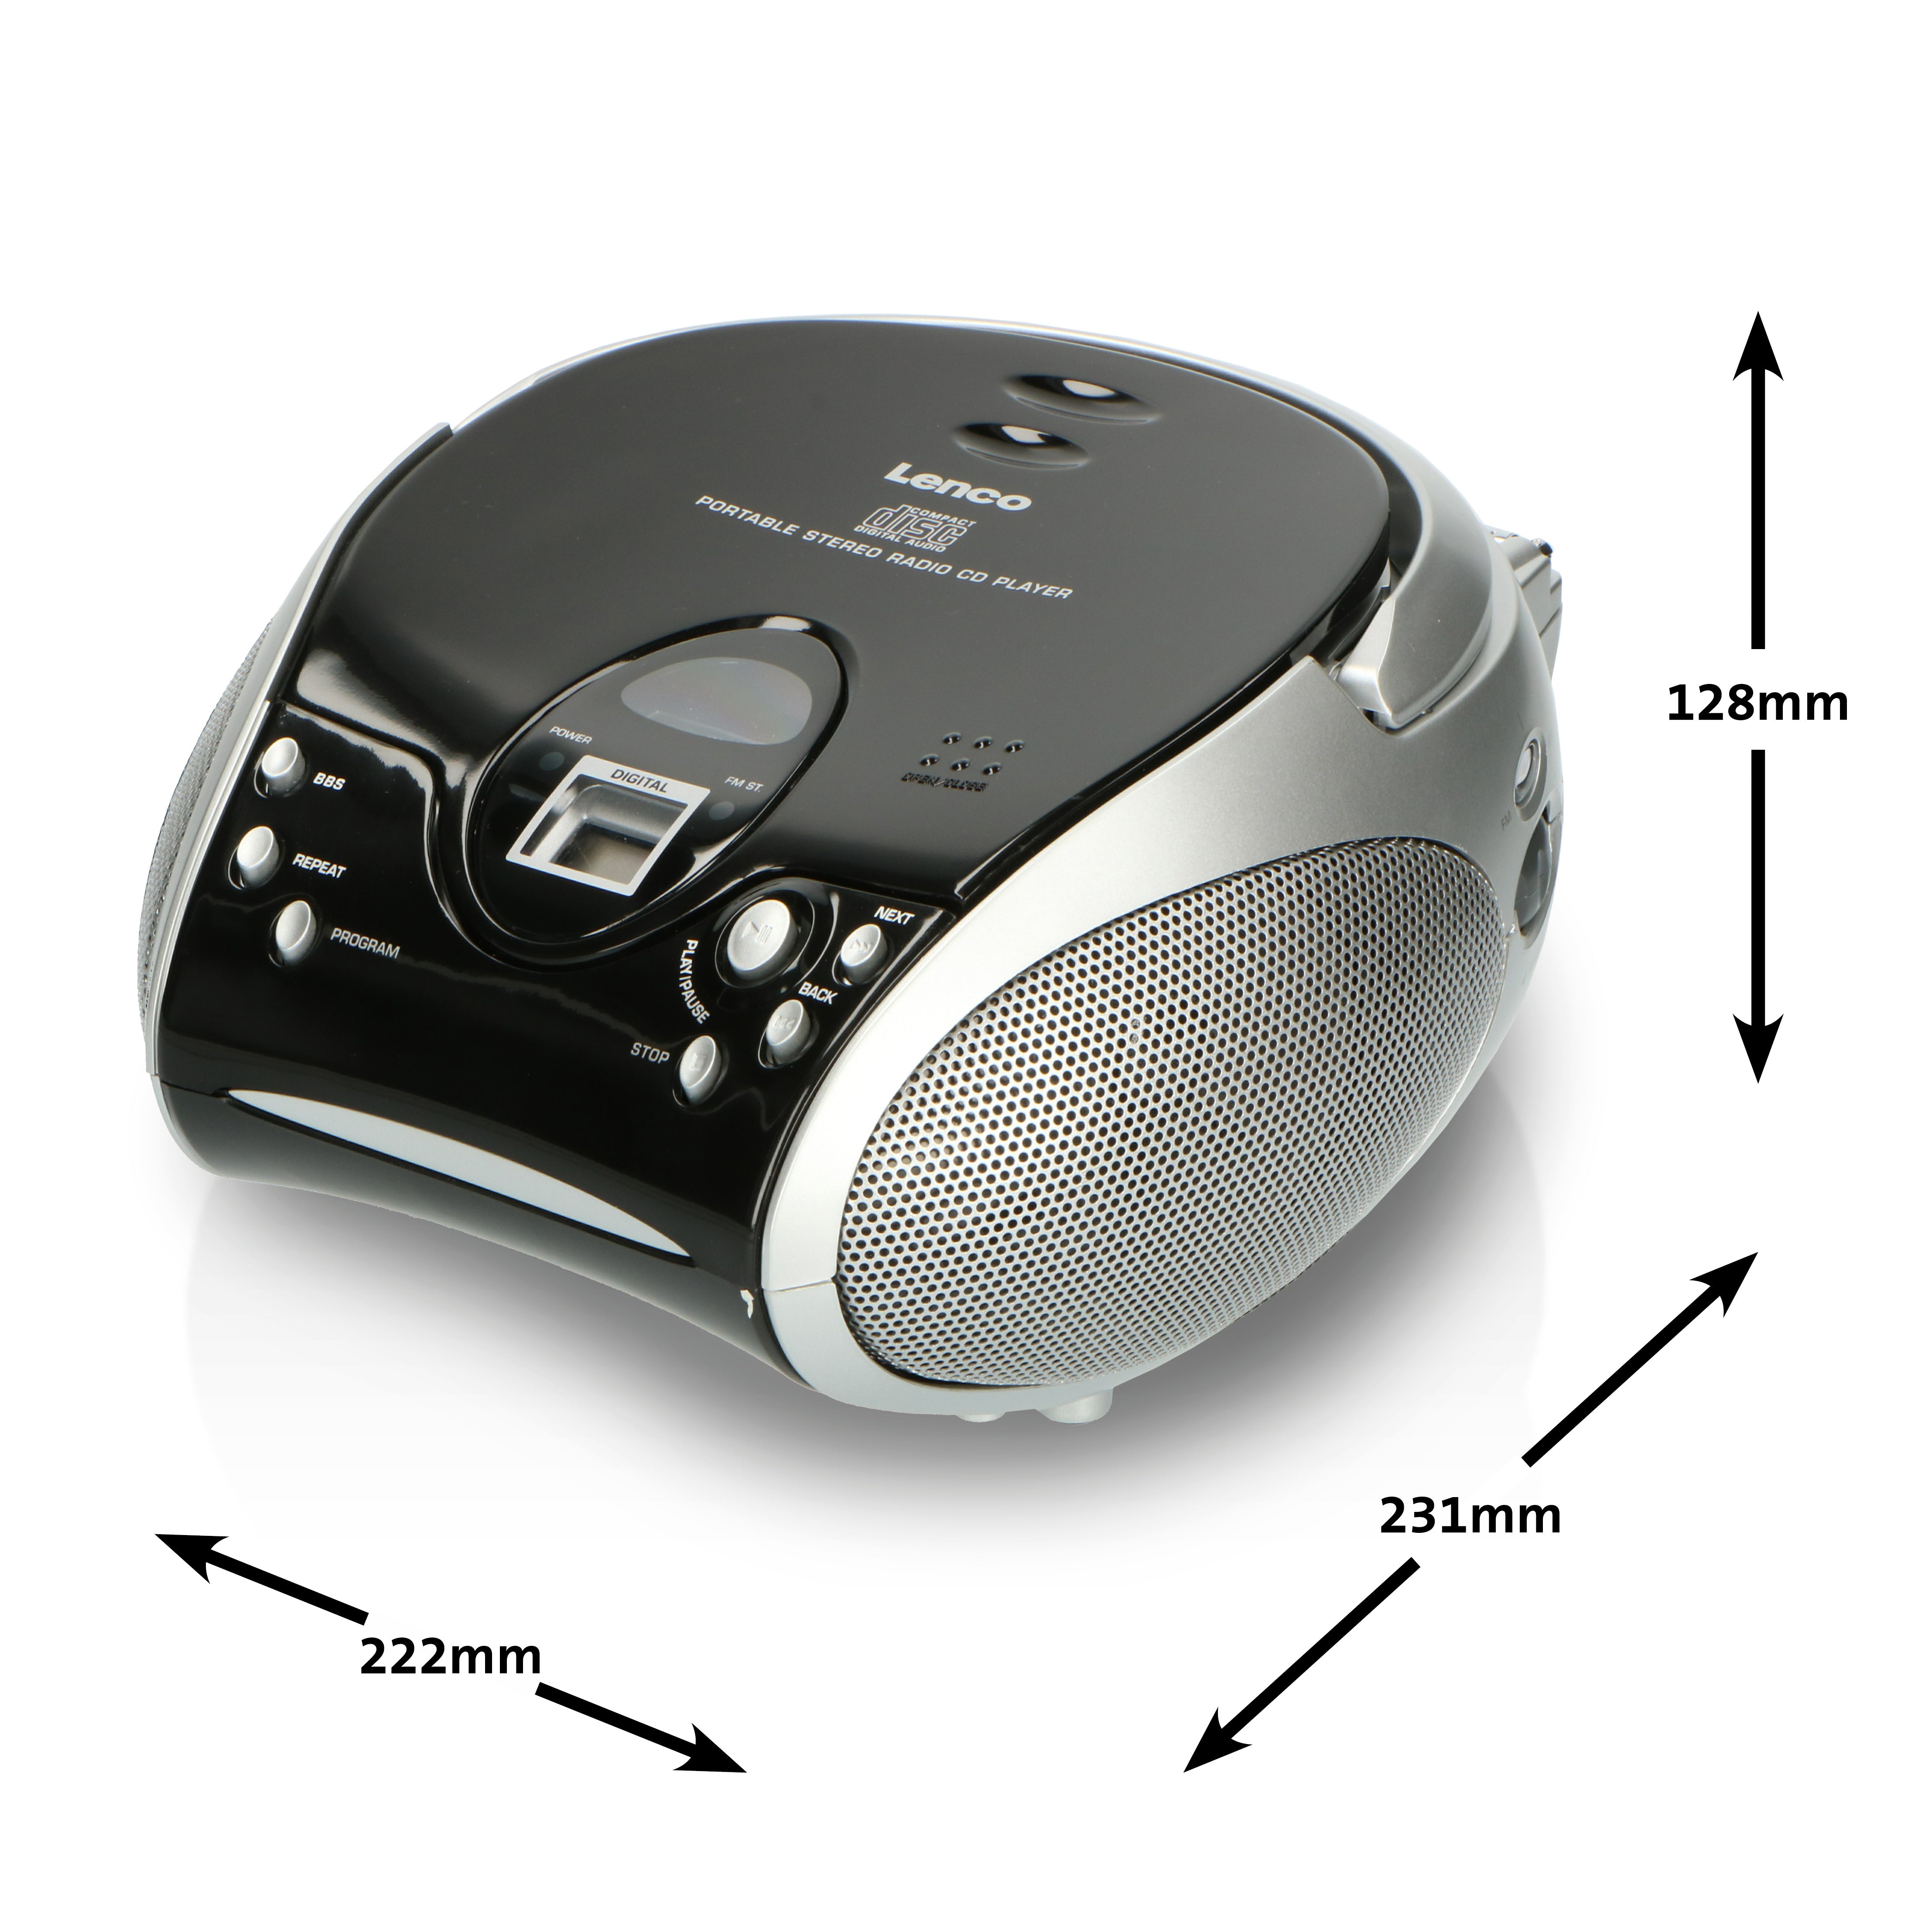 LENCO SCD-24 Black/Silver - Portable stereo FM radio with CD player - Black/silver